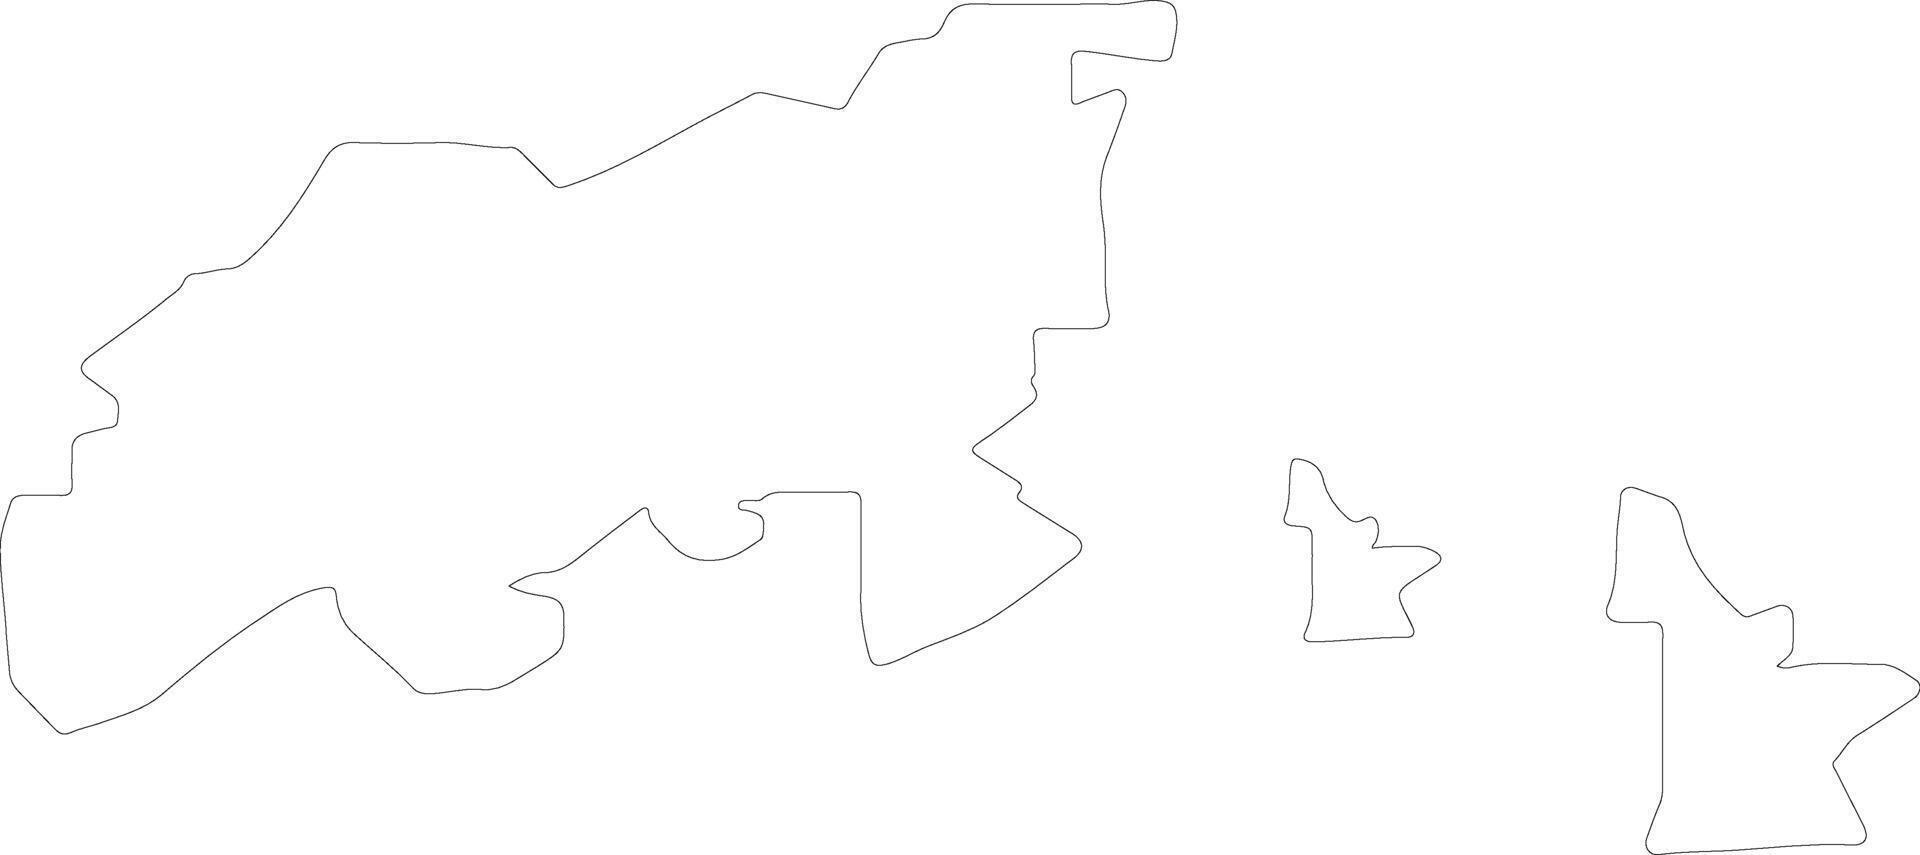 Islands Hong Kong outline map vector